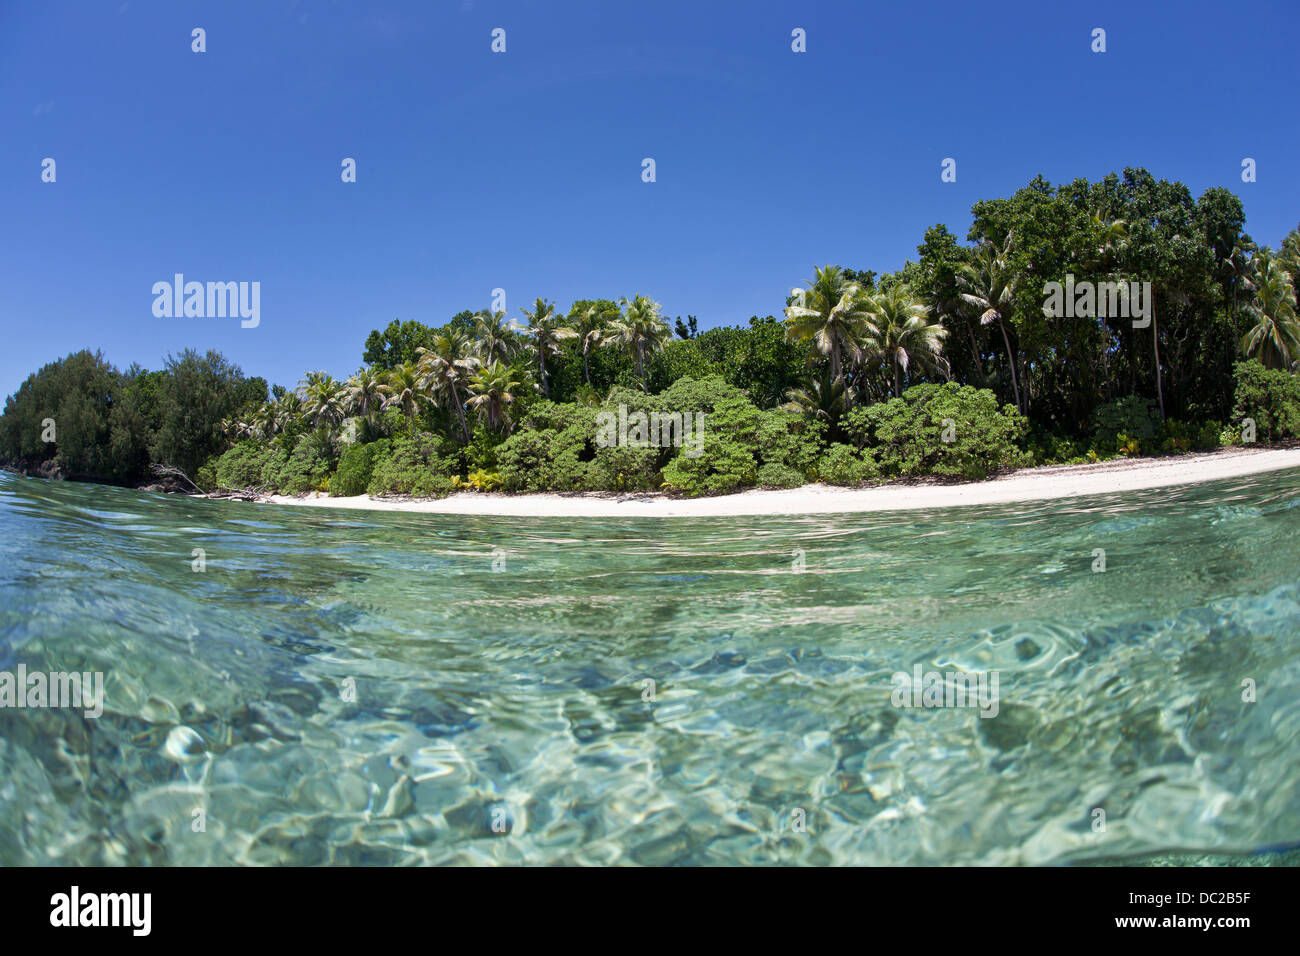 Strand von Rock-Inseln, Mikronesien, Palau Stockfoto